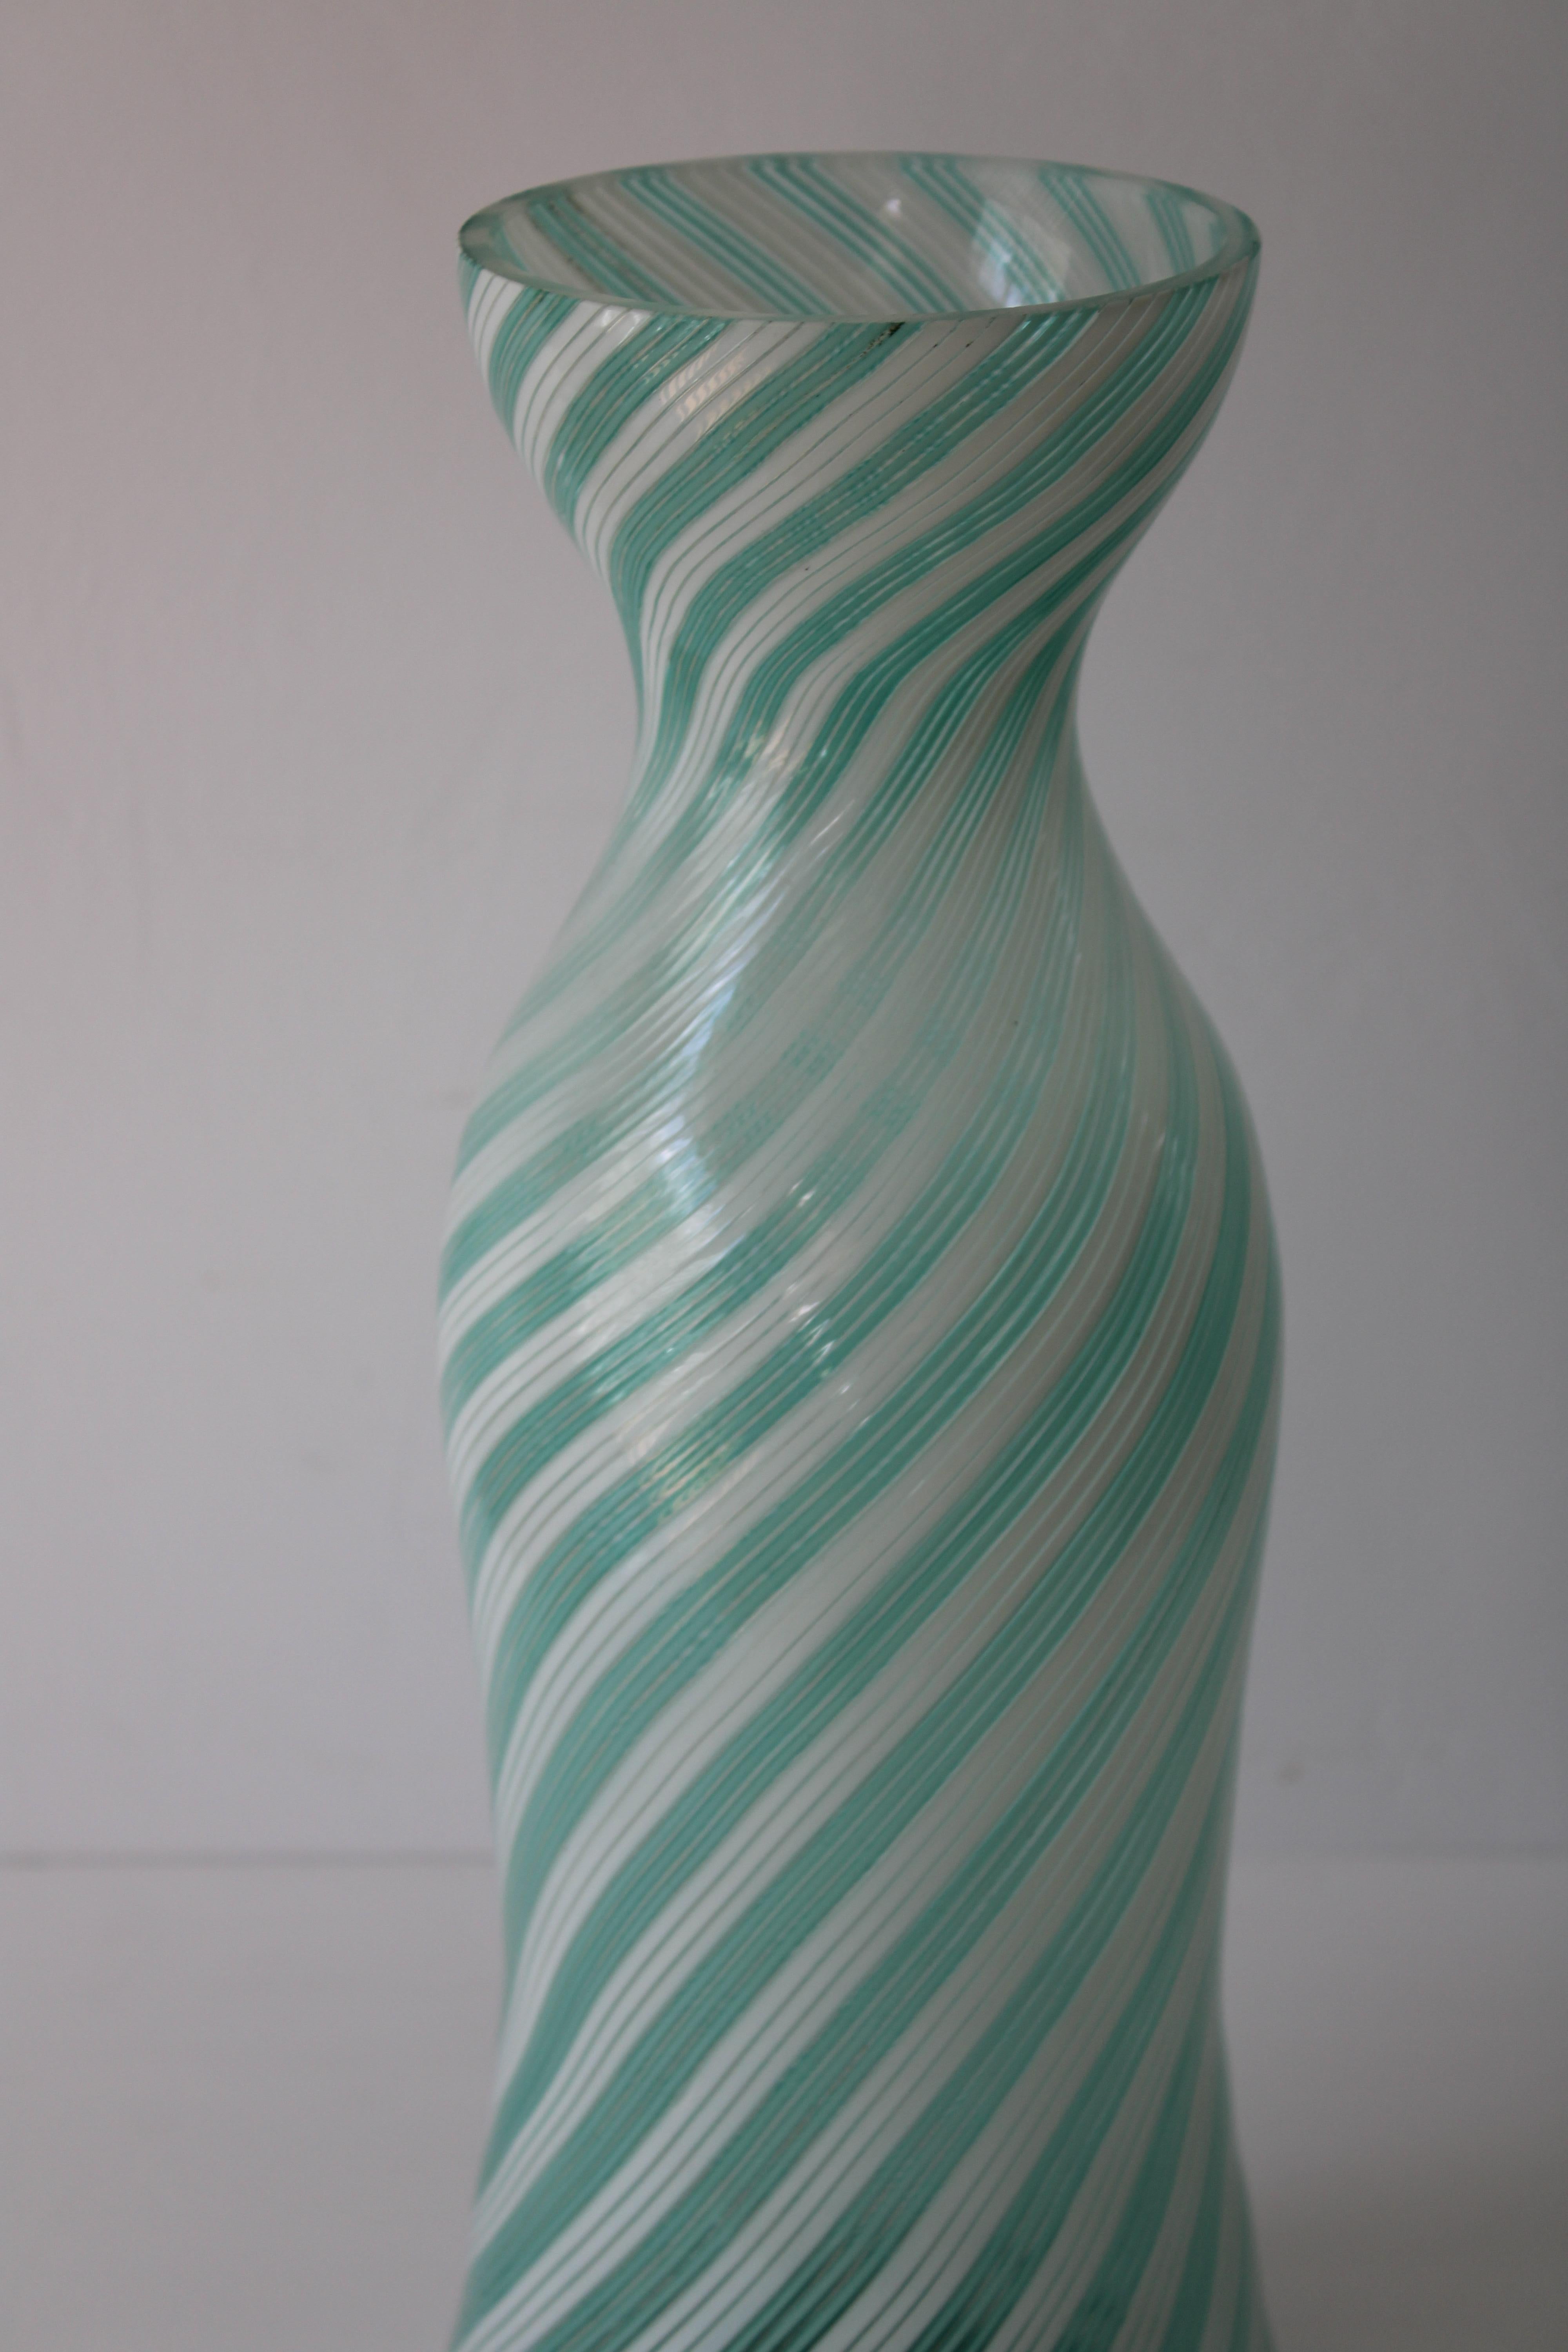 Seguso Murano Glass Vase For Sale 3